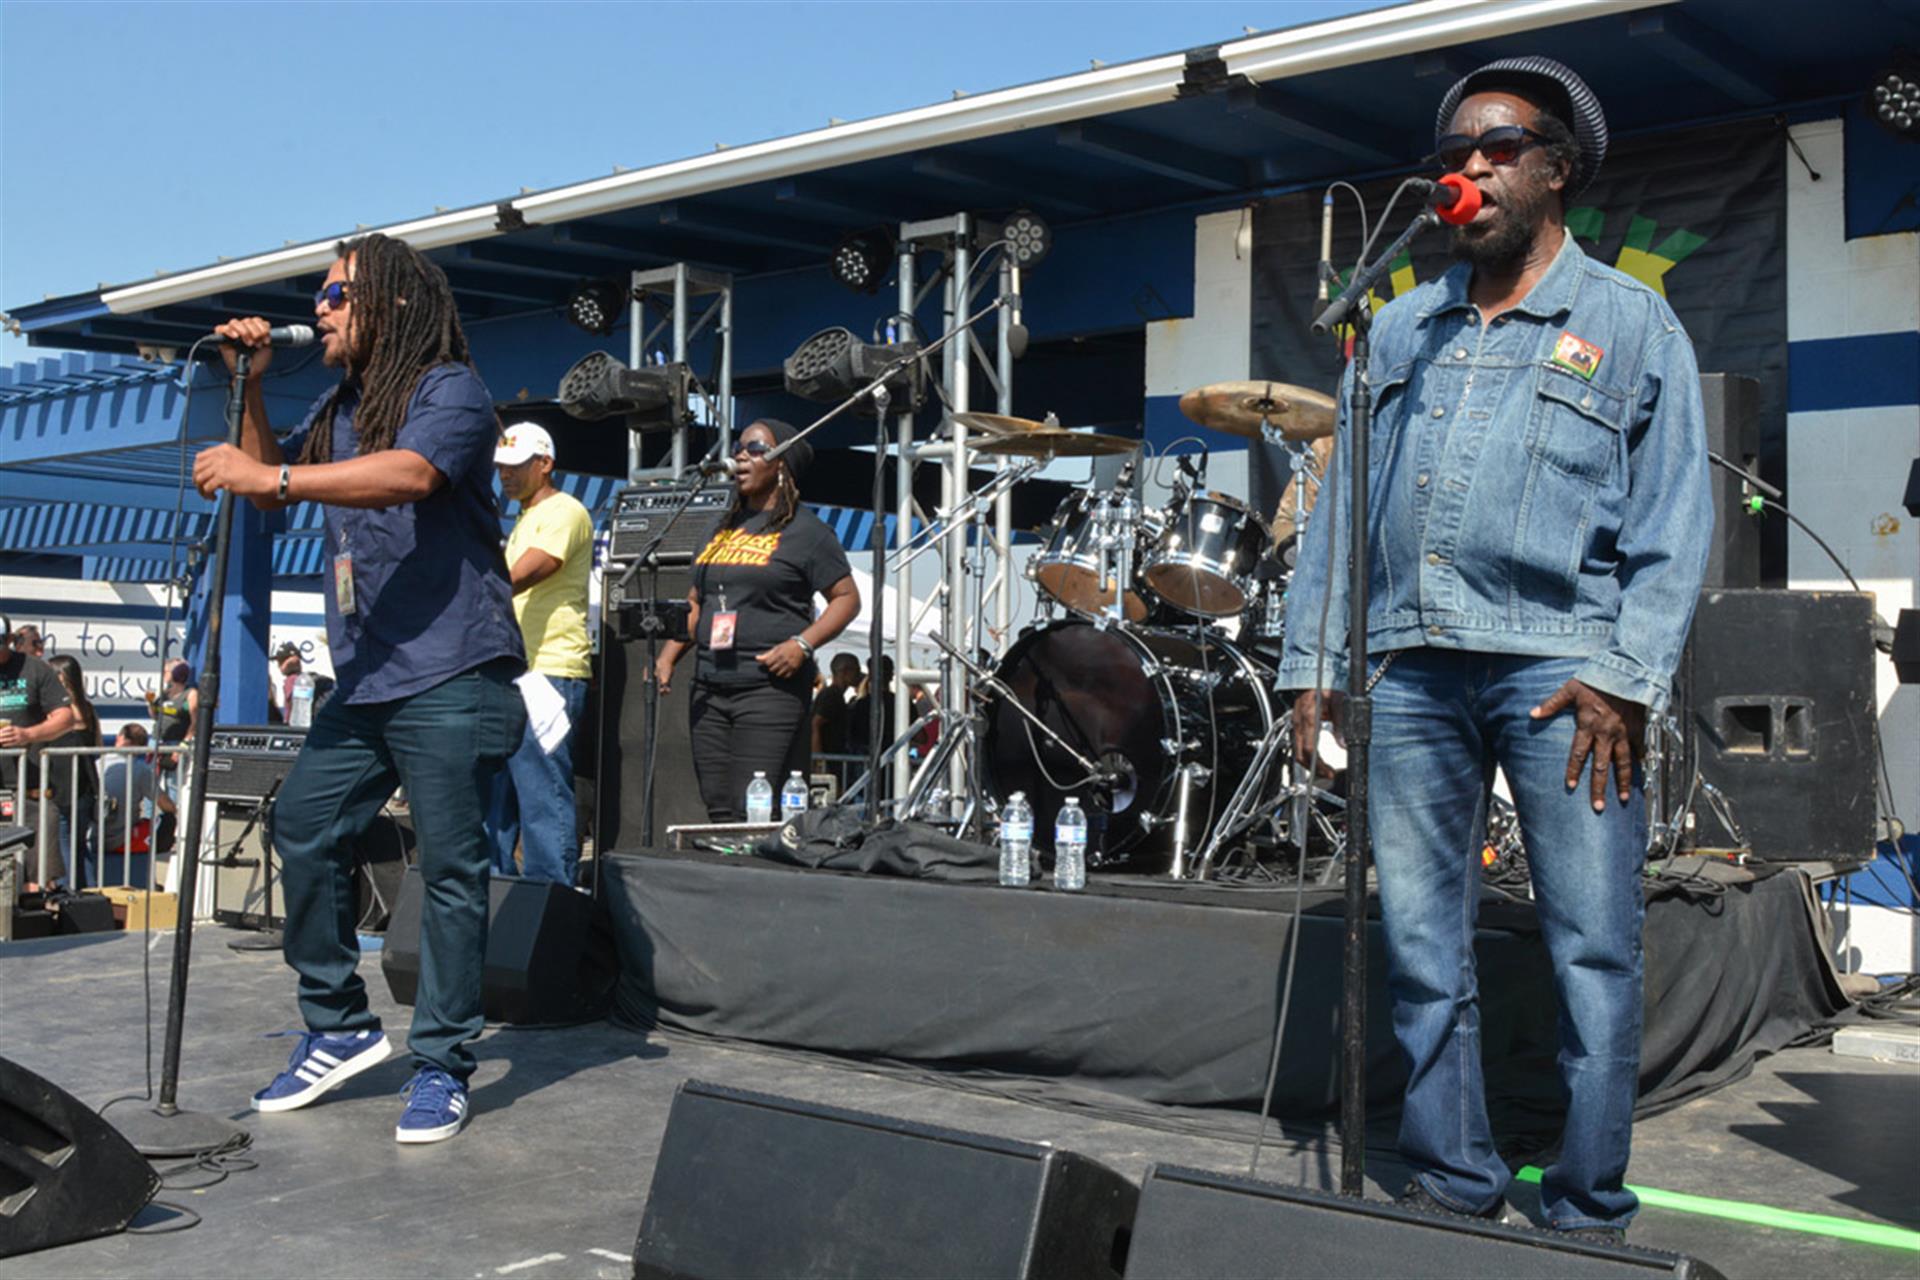 Fotografía personal divulgada donde aparecen los integrantes de la legendaria banda jamaiquina de reggae Black Uhuru que actuará el sábado en el primer 